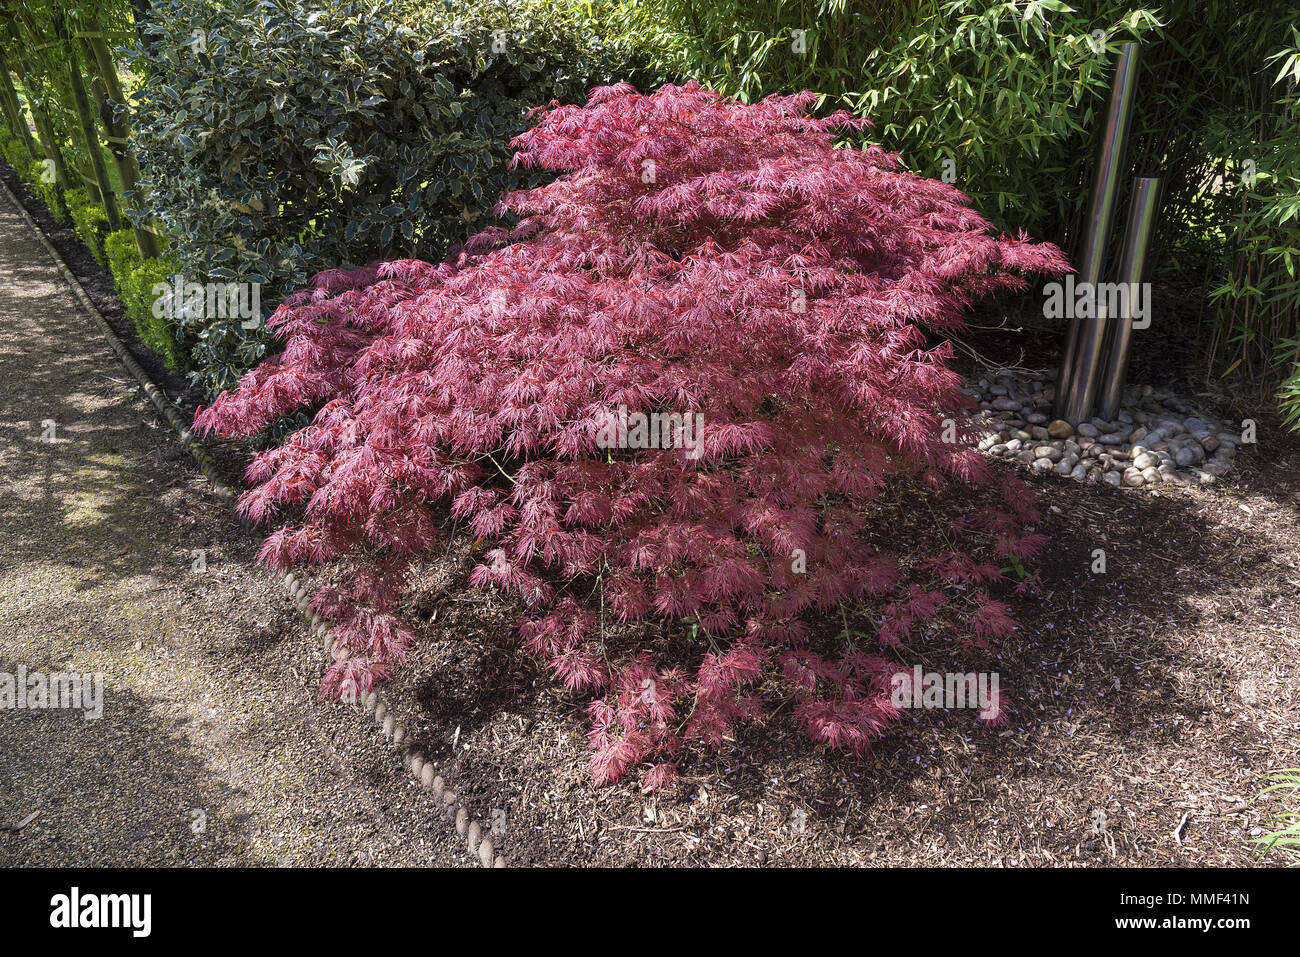 Acer palmatum or Japanese maple shrub growing  an oramental garden with gravel surround. Stock Photo